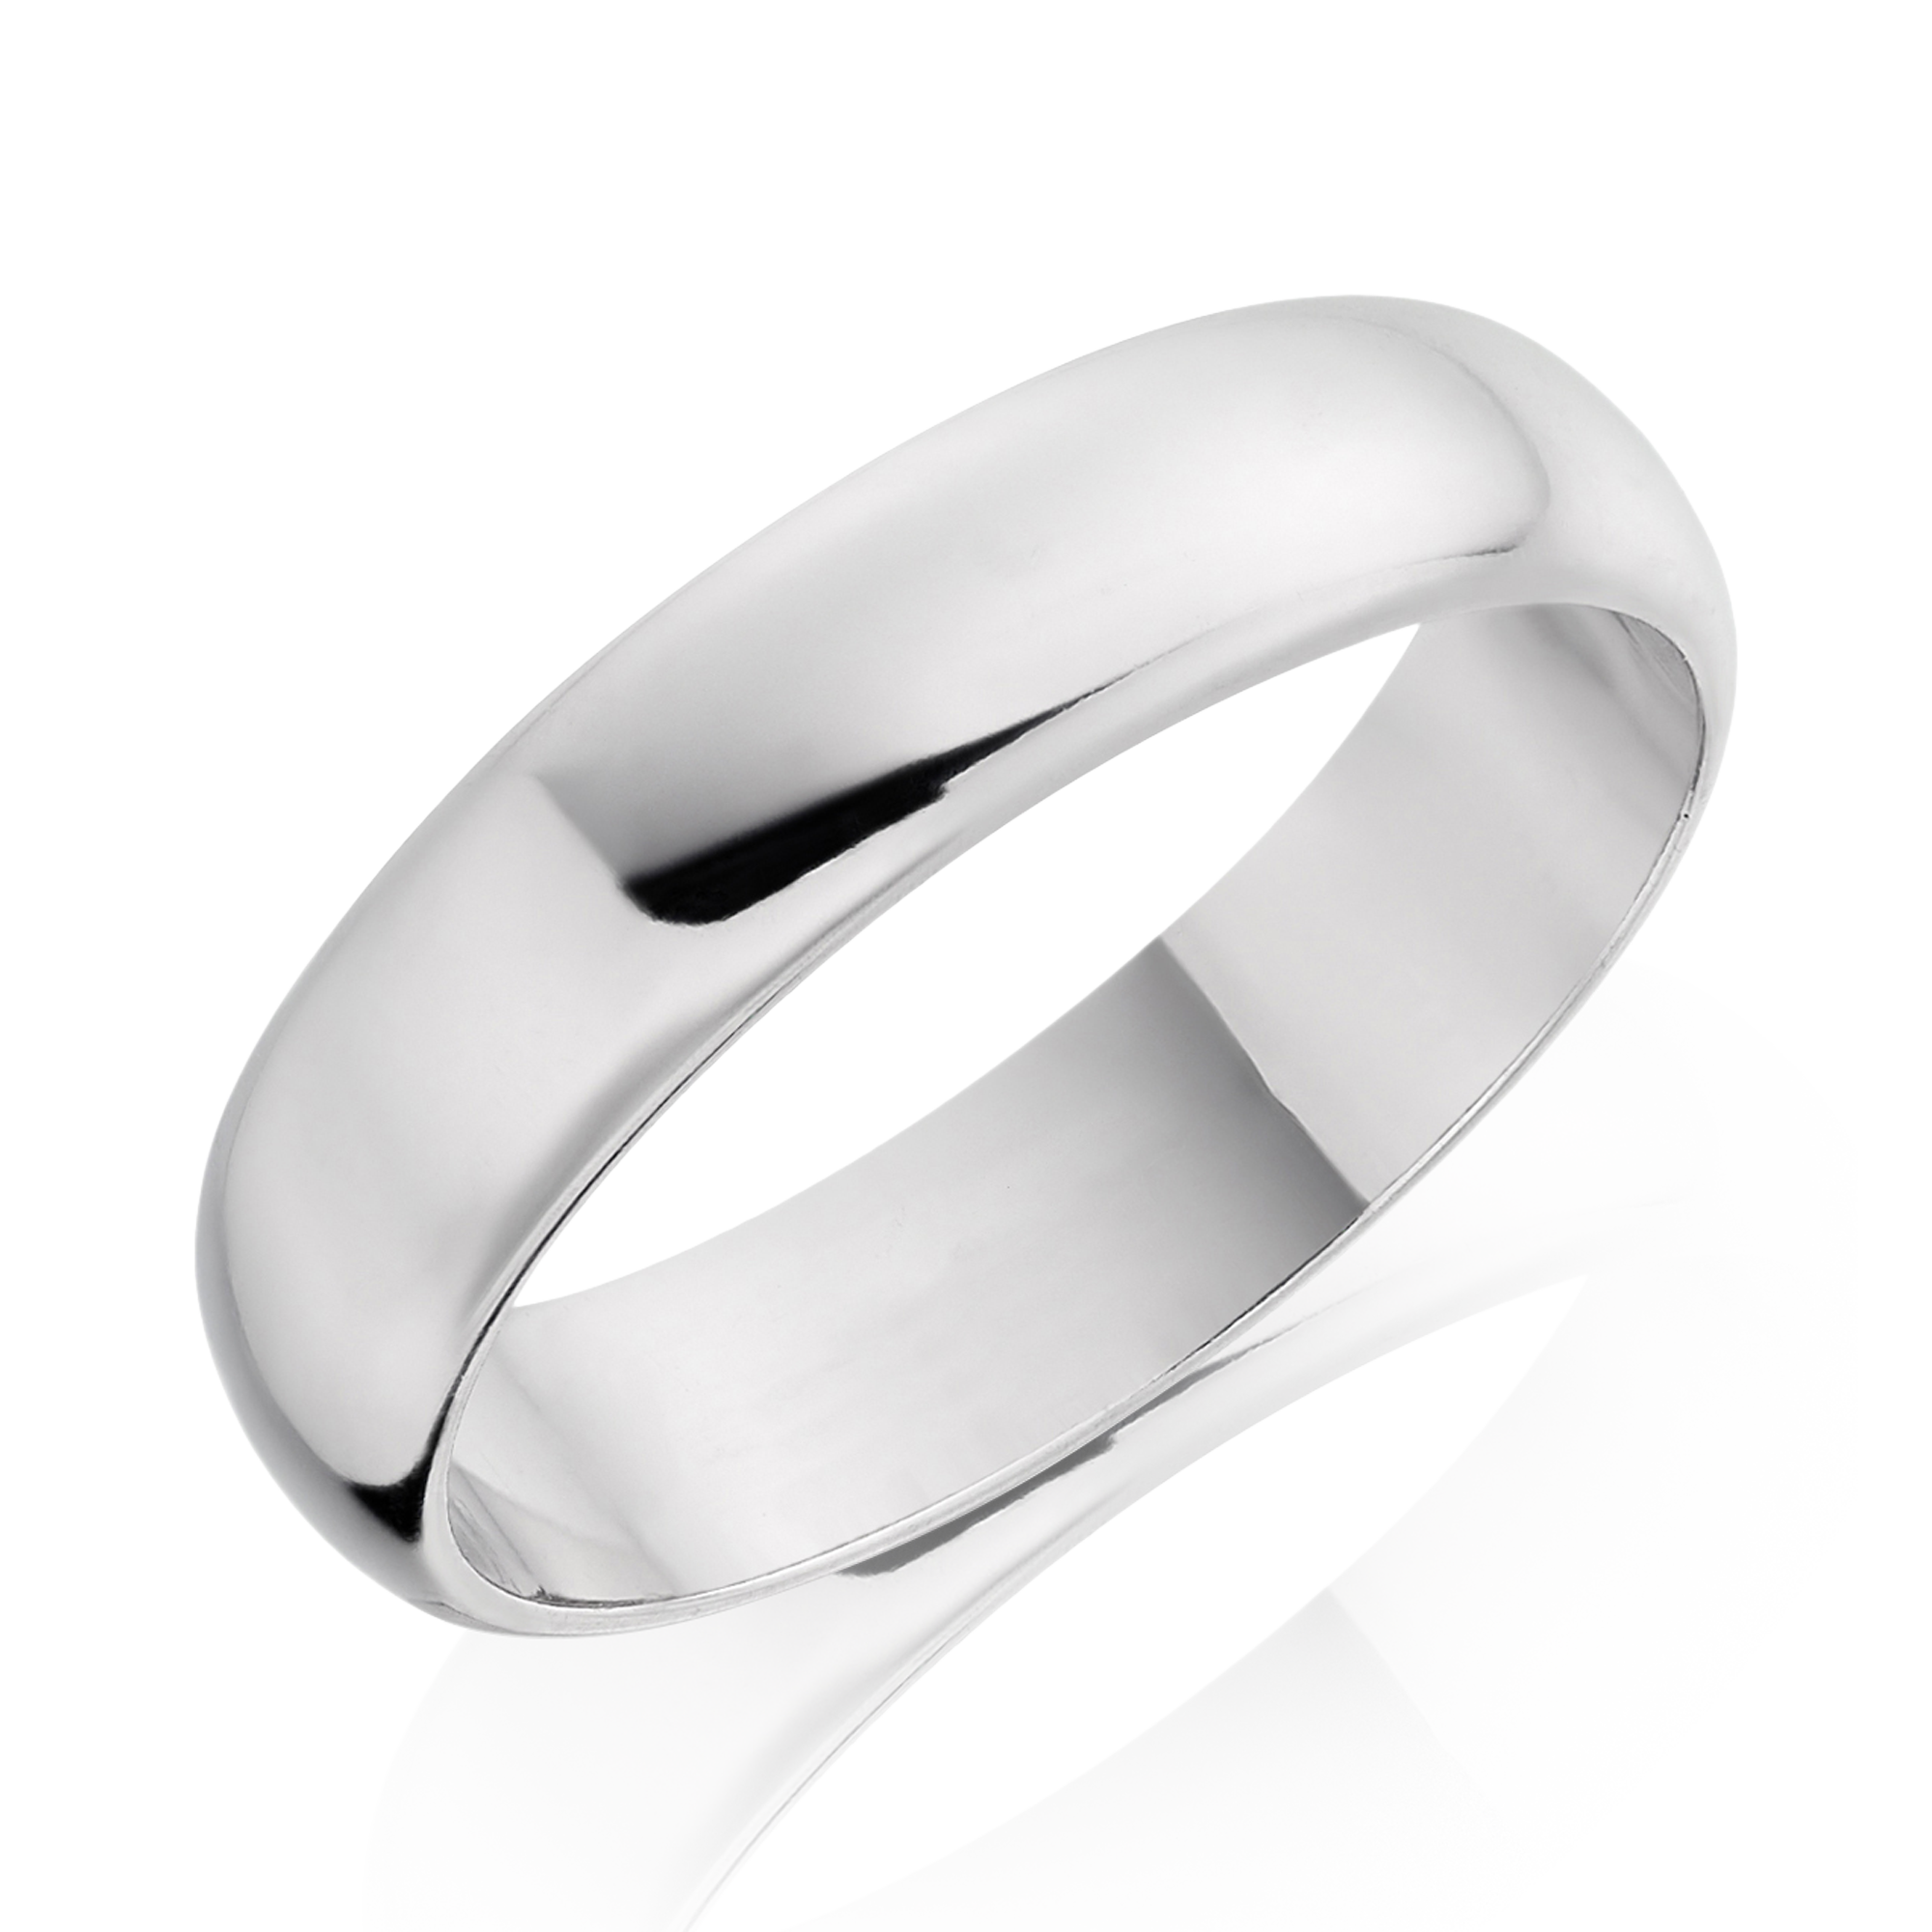 5mm D-Shape Wedding Ring _1